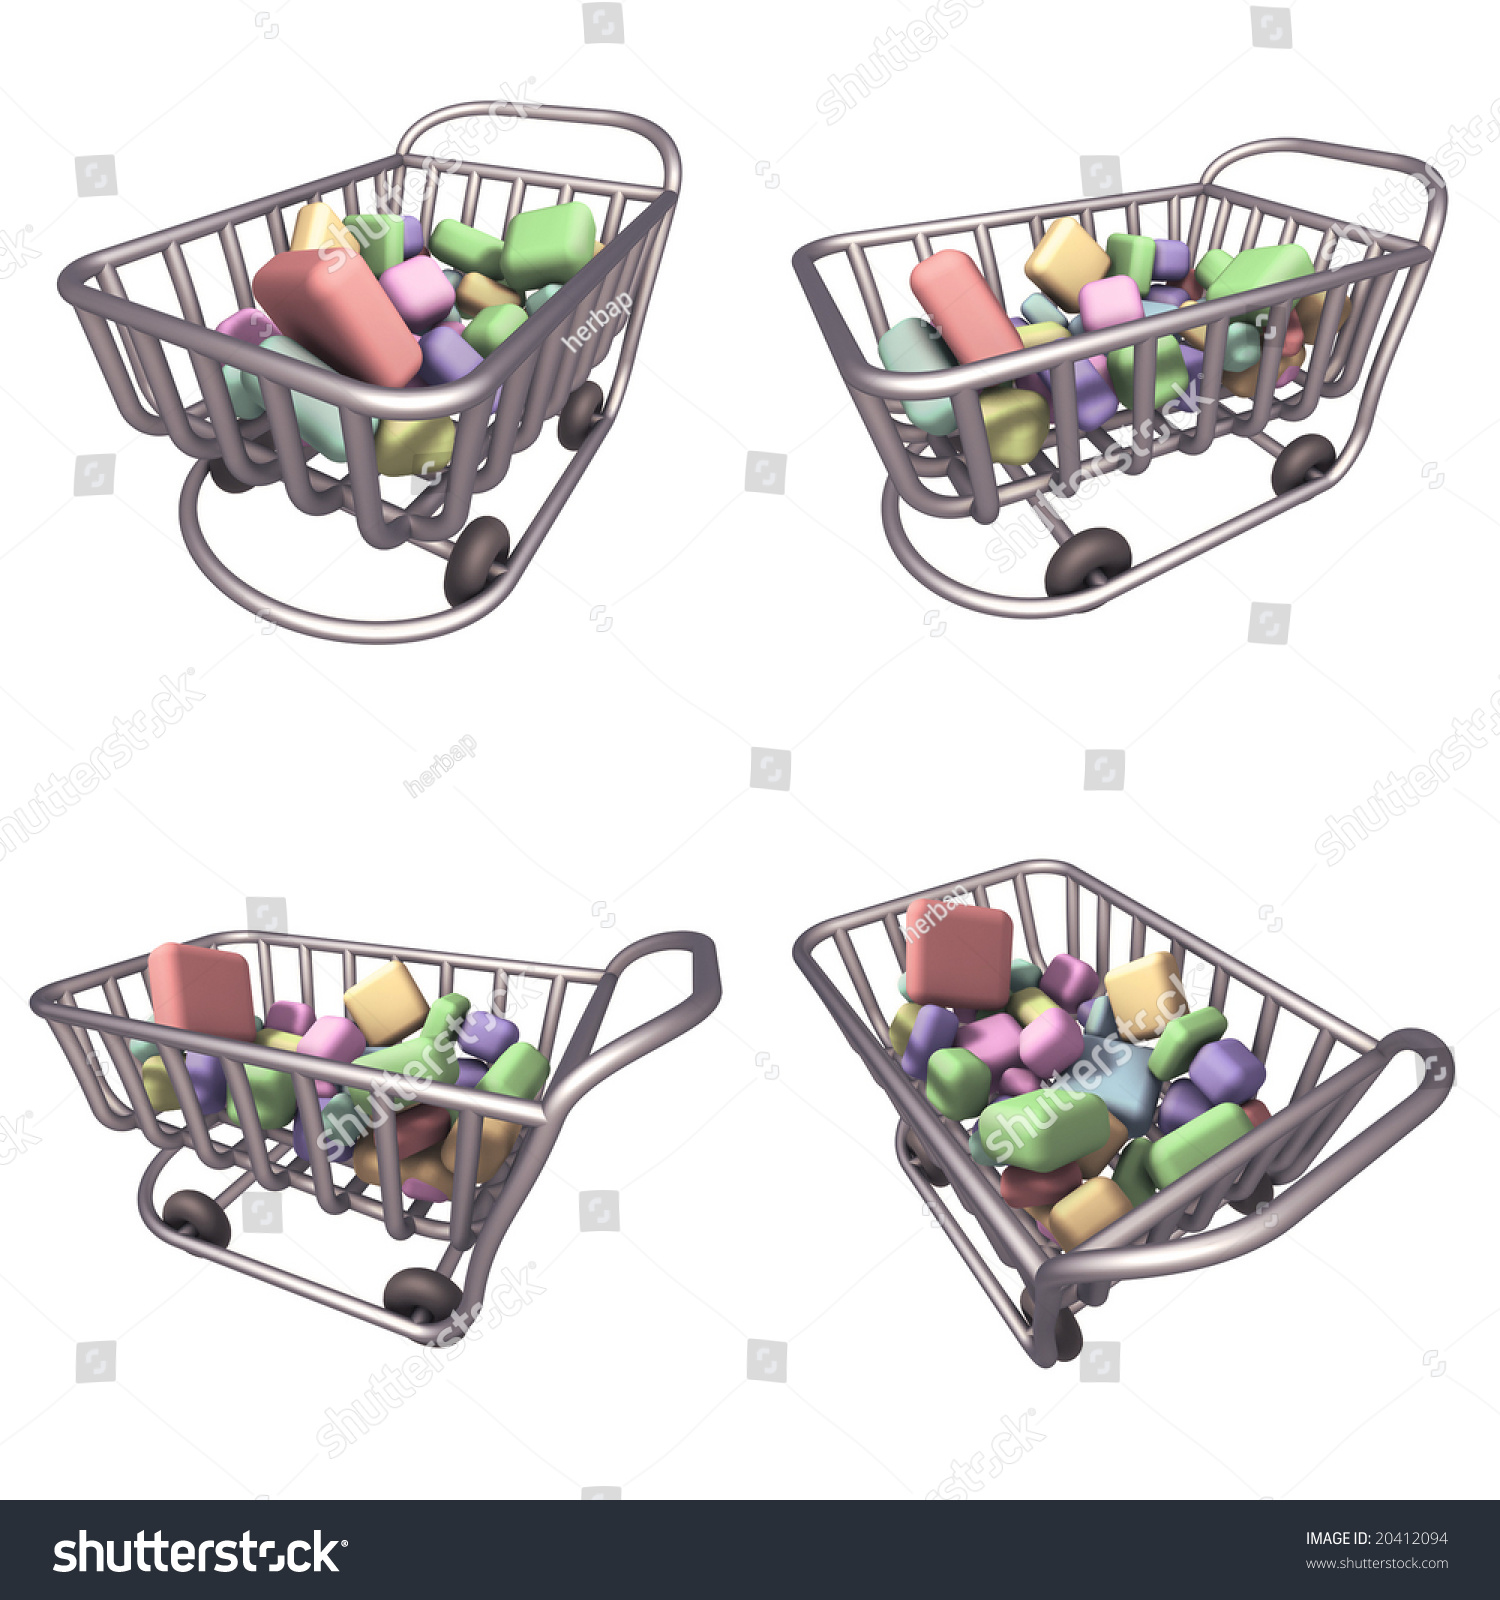 Cartoon Shopping Cart Stock Illustration 20412094 - Shutterstock